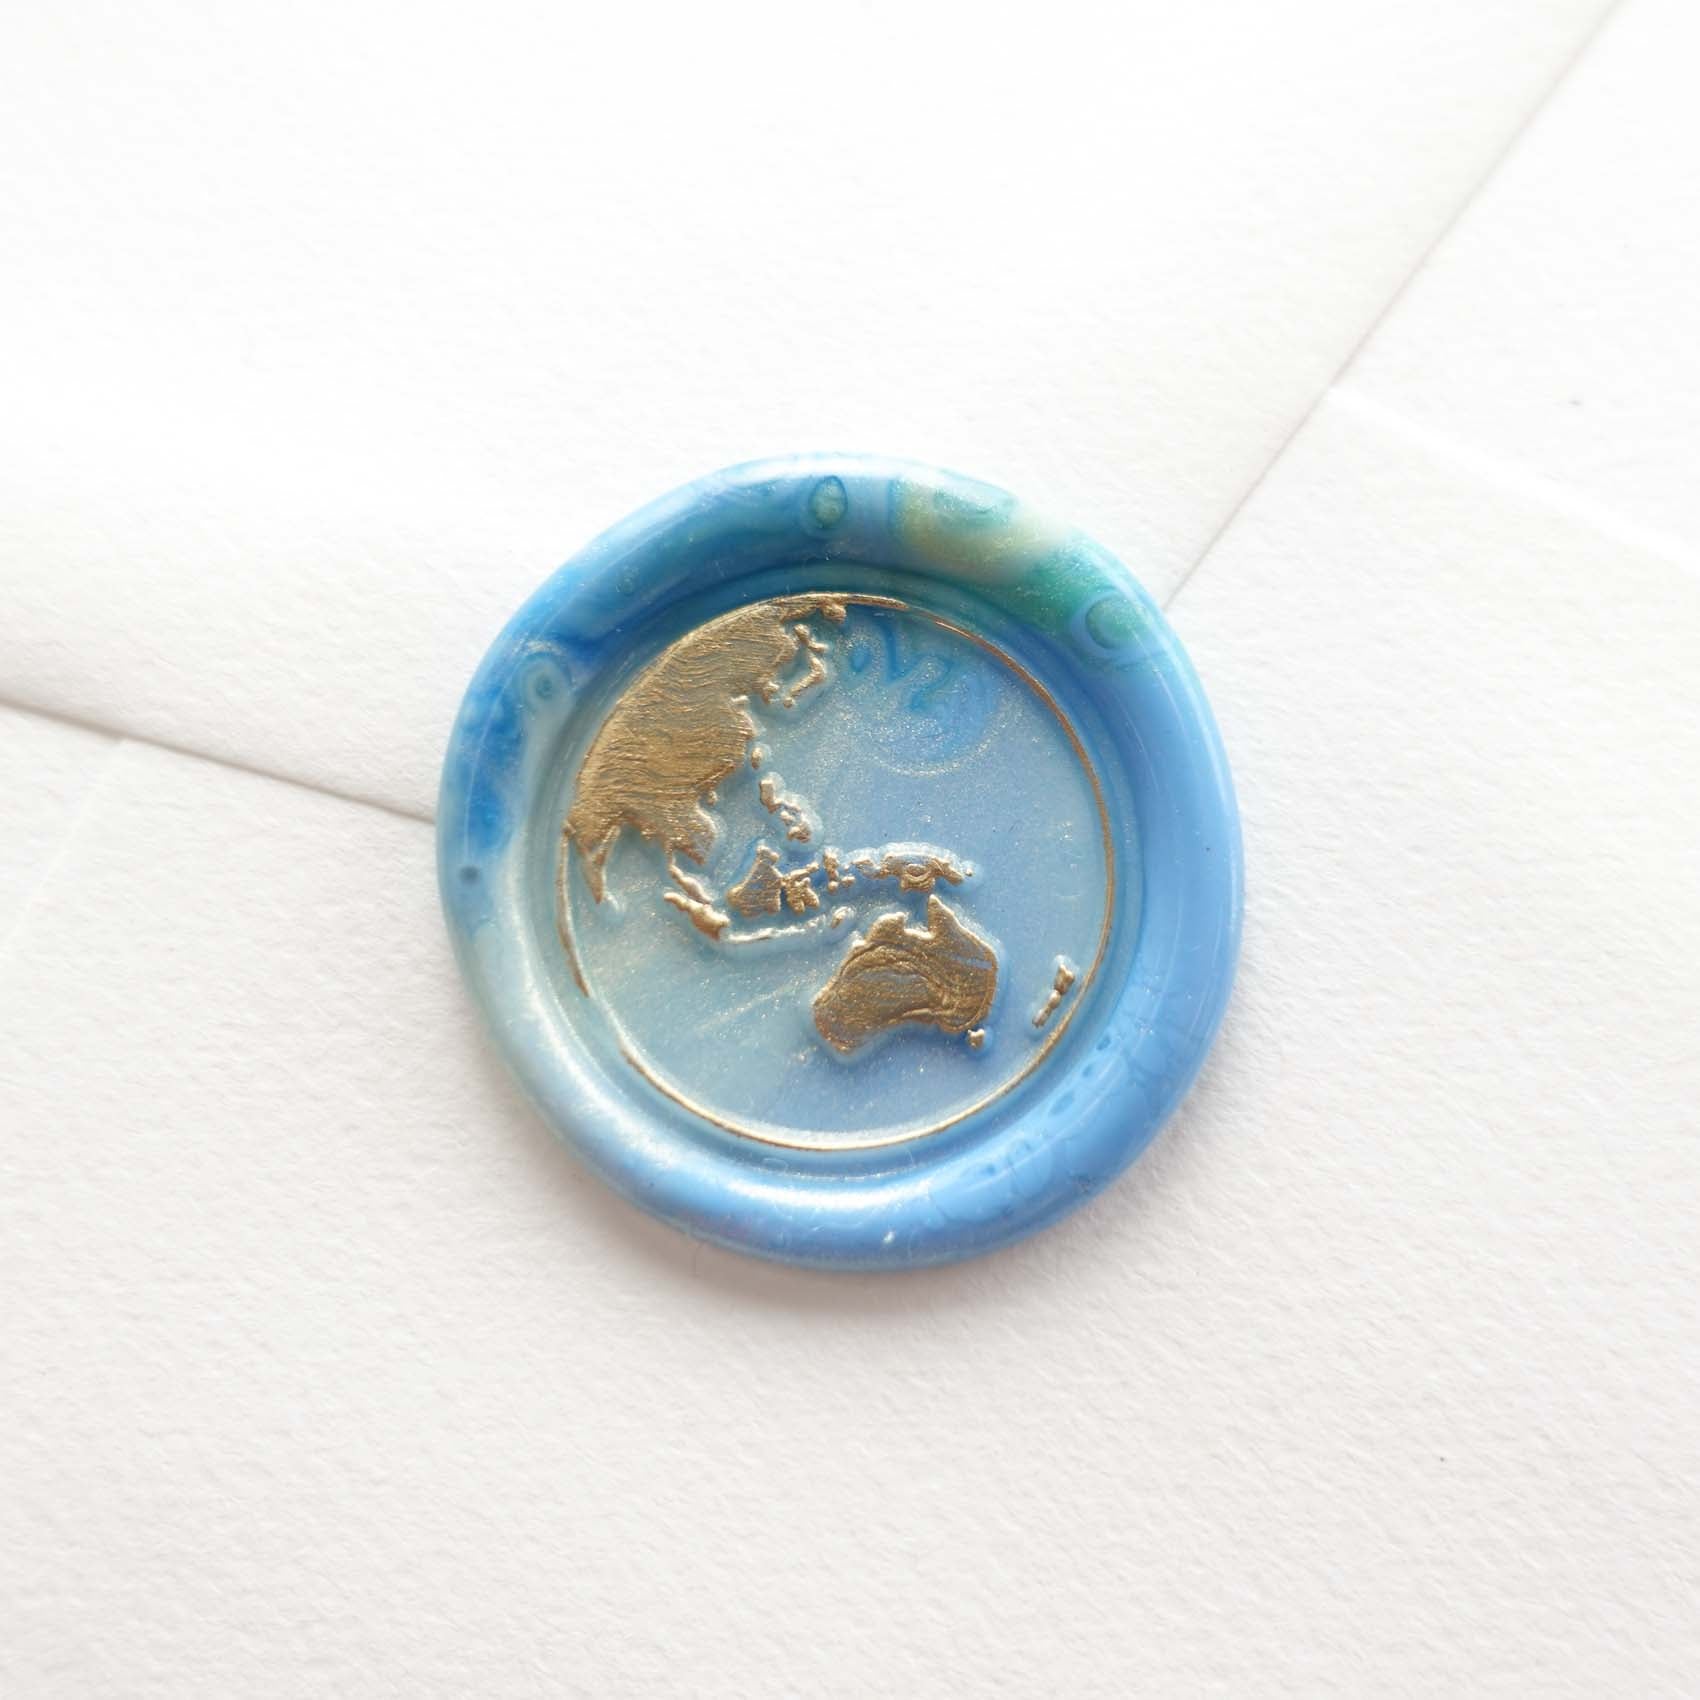 Earth Globe wax seal stamp, wax seal kit or stamp head